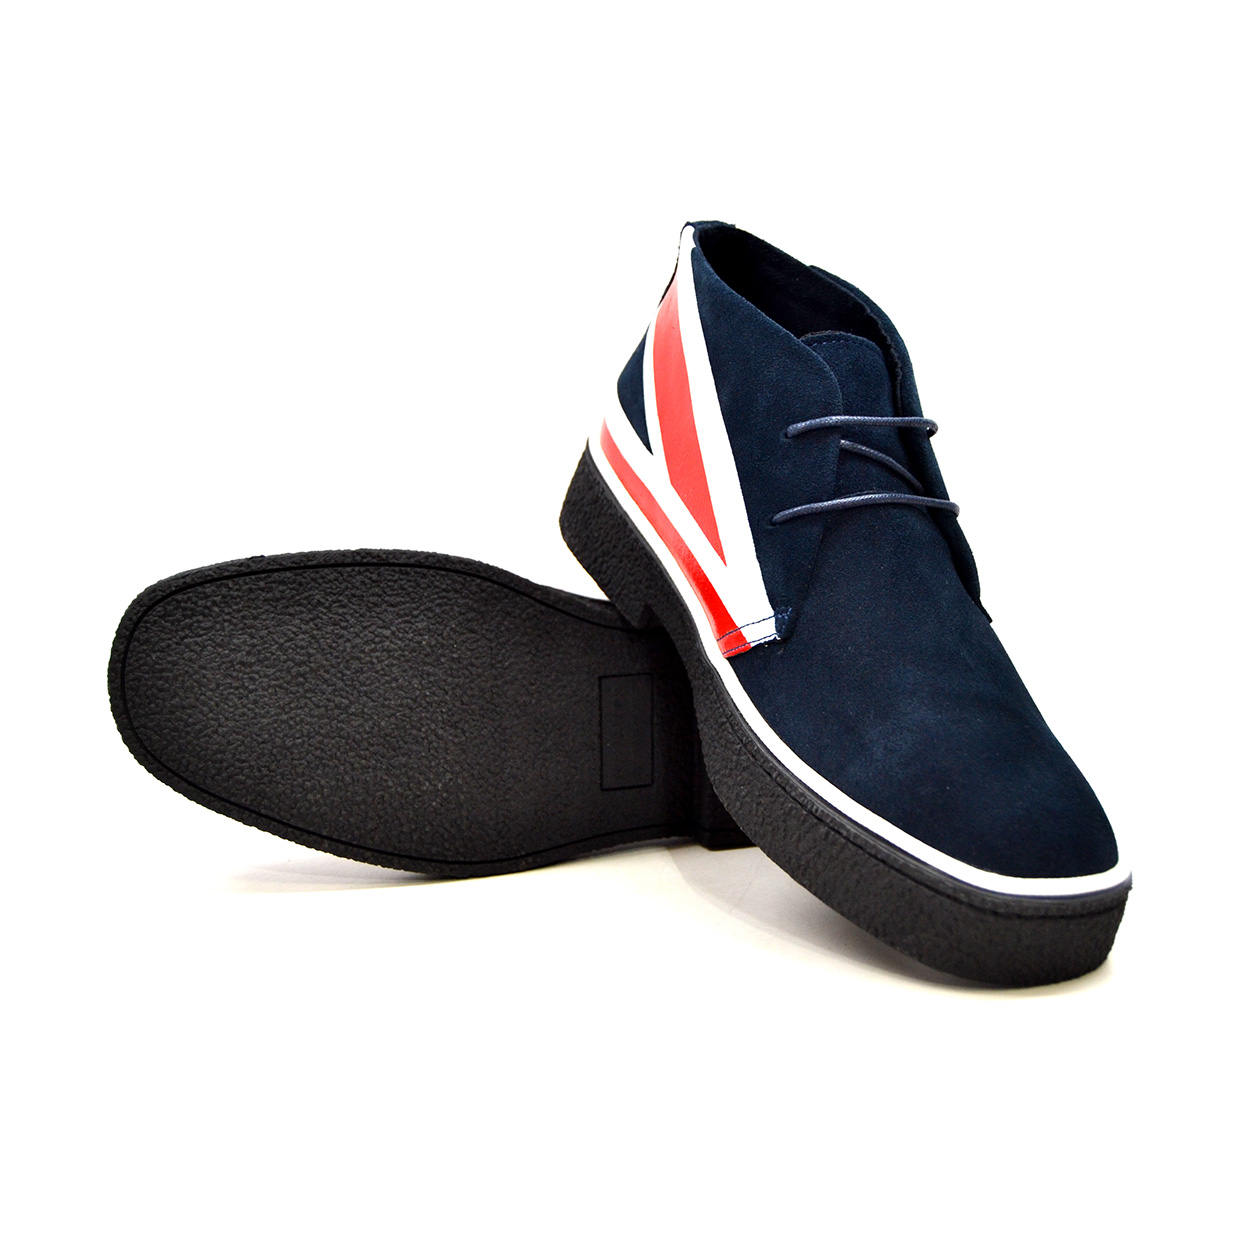 British Walkers Collection Men's Original Playboy Old-School Shoes Union Jack 